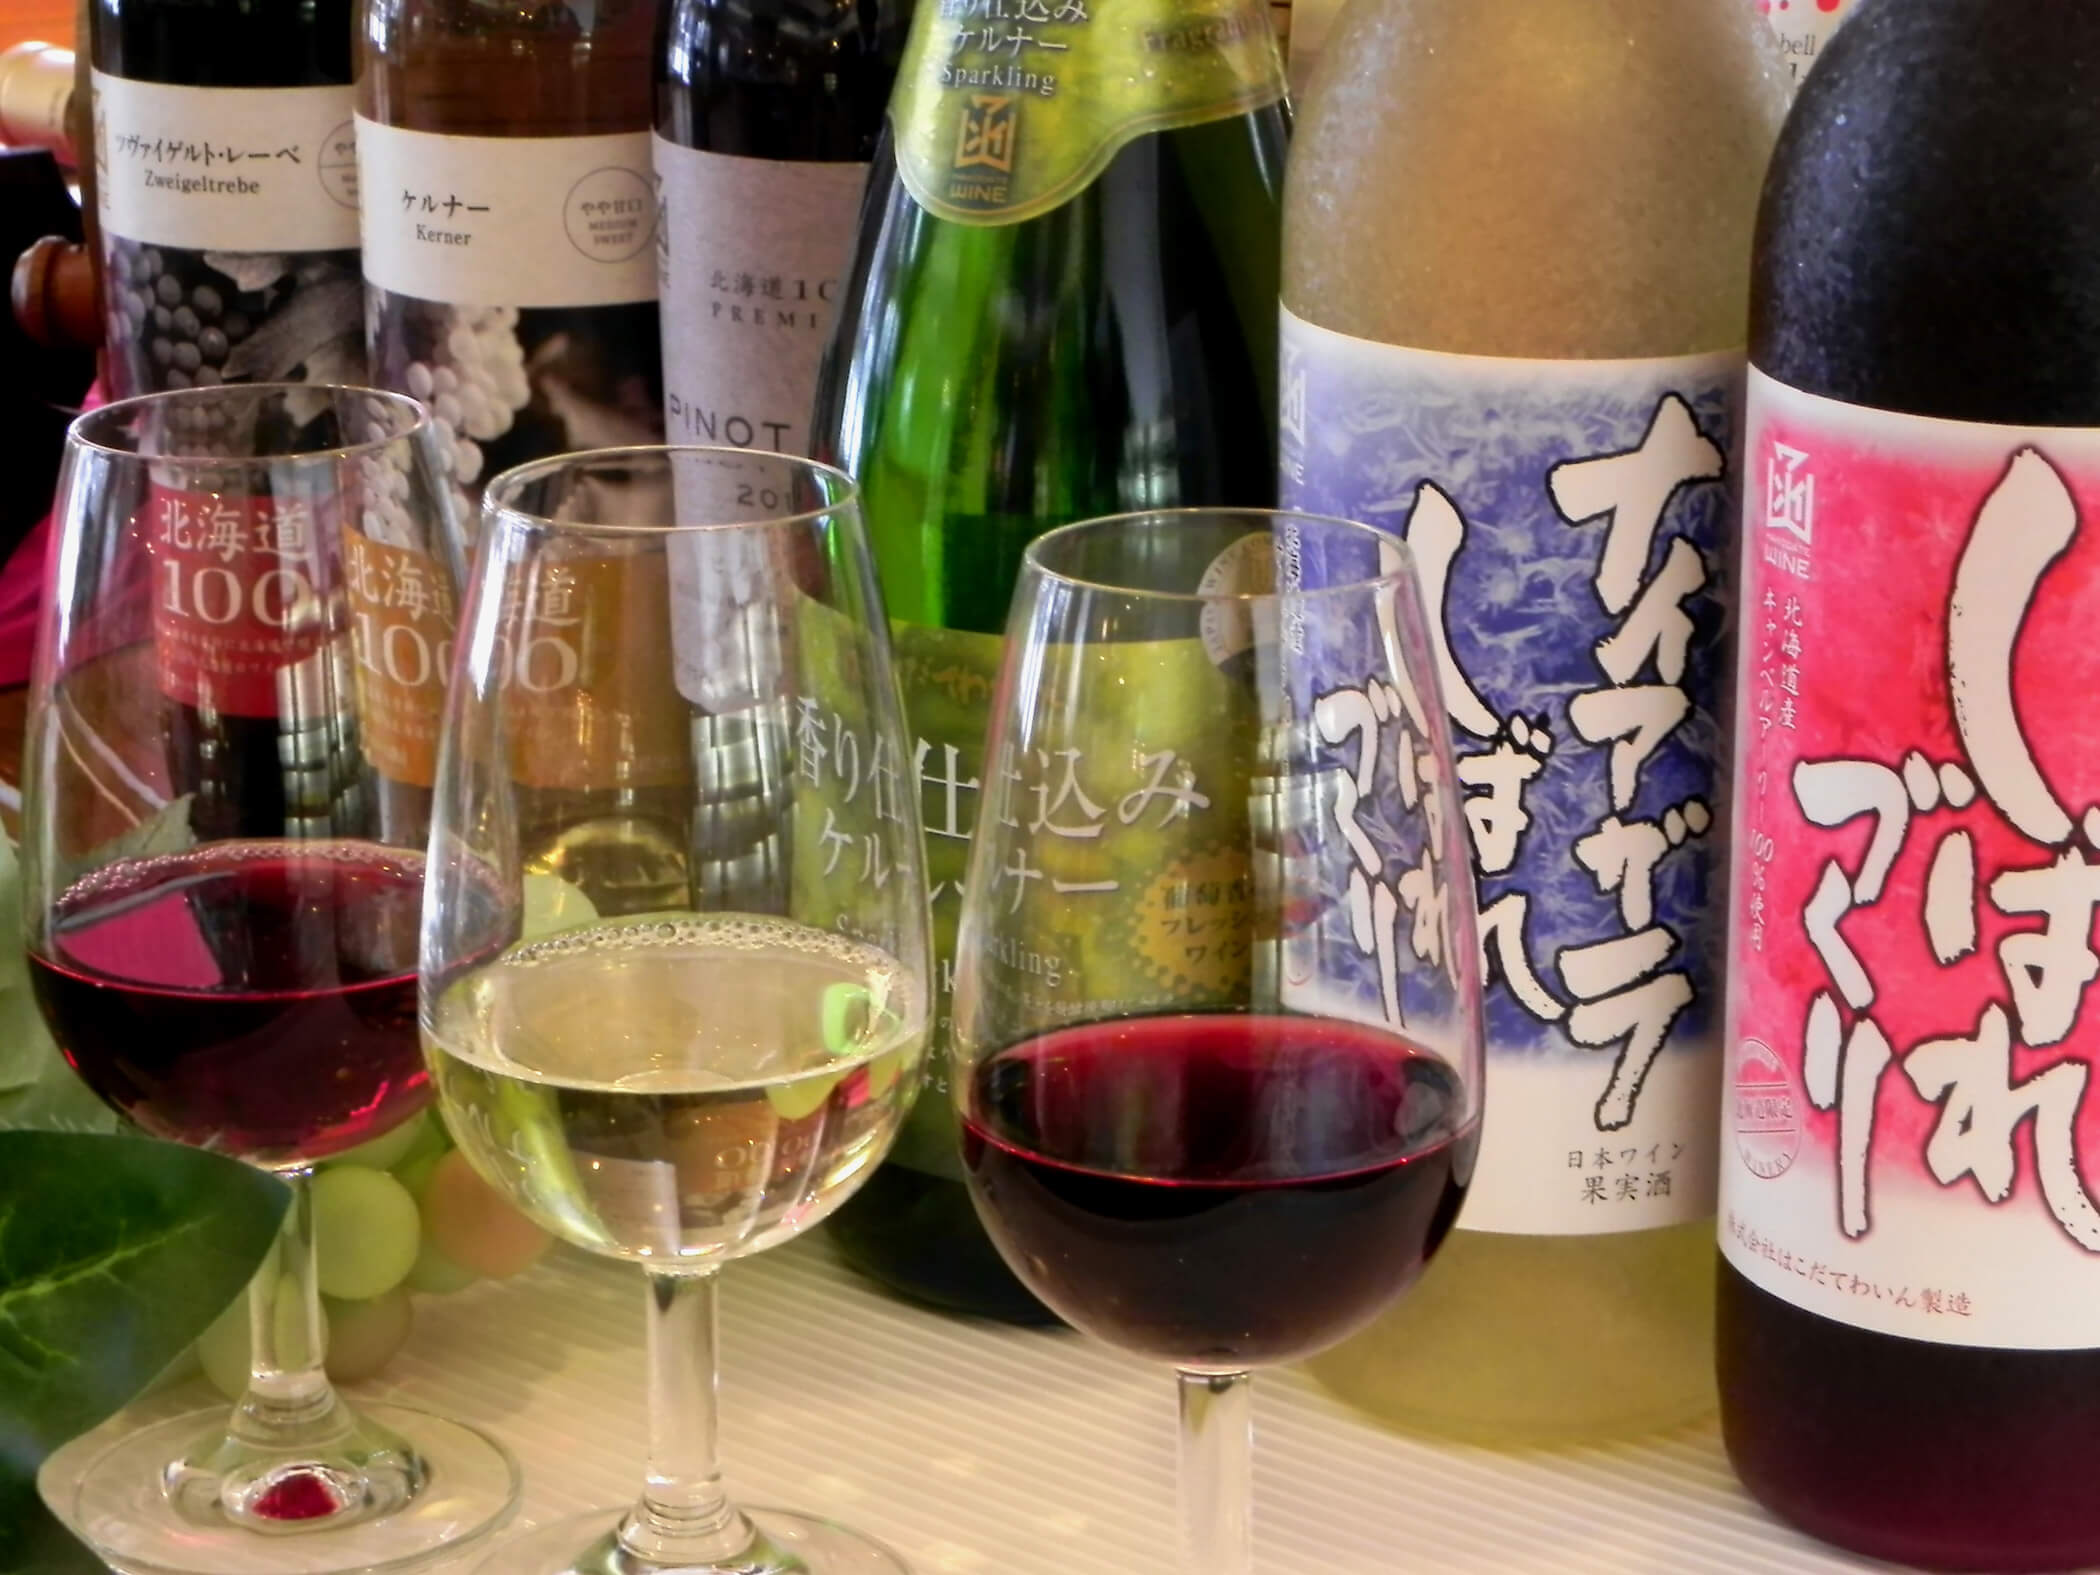 Hakodate Wine: Local Wine for Local Tastes